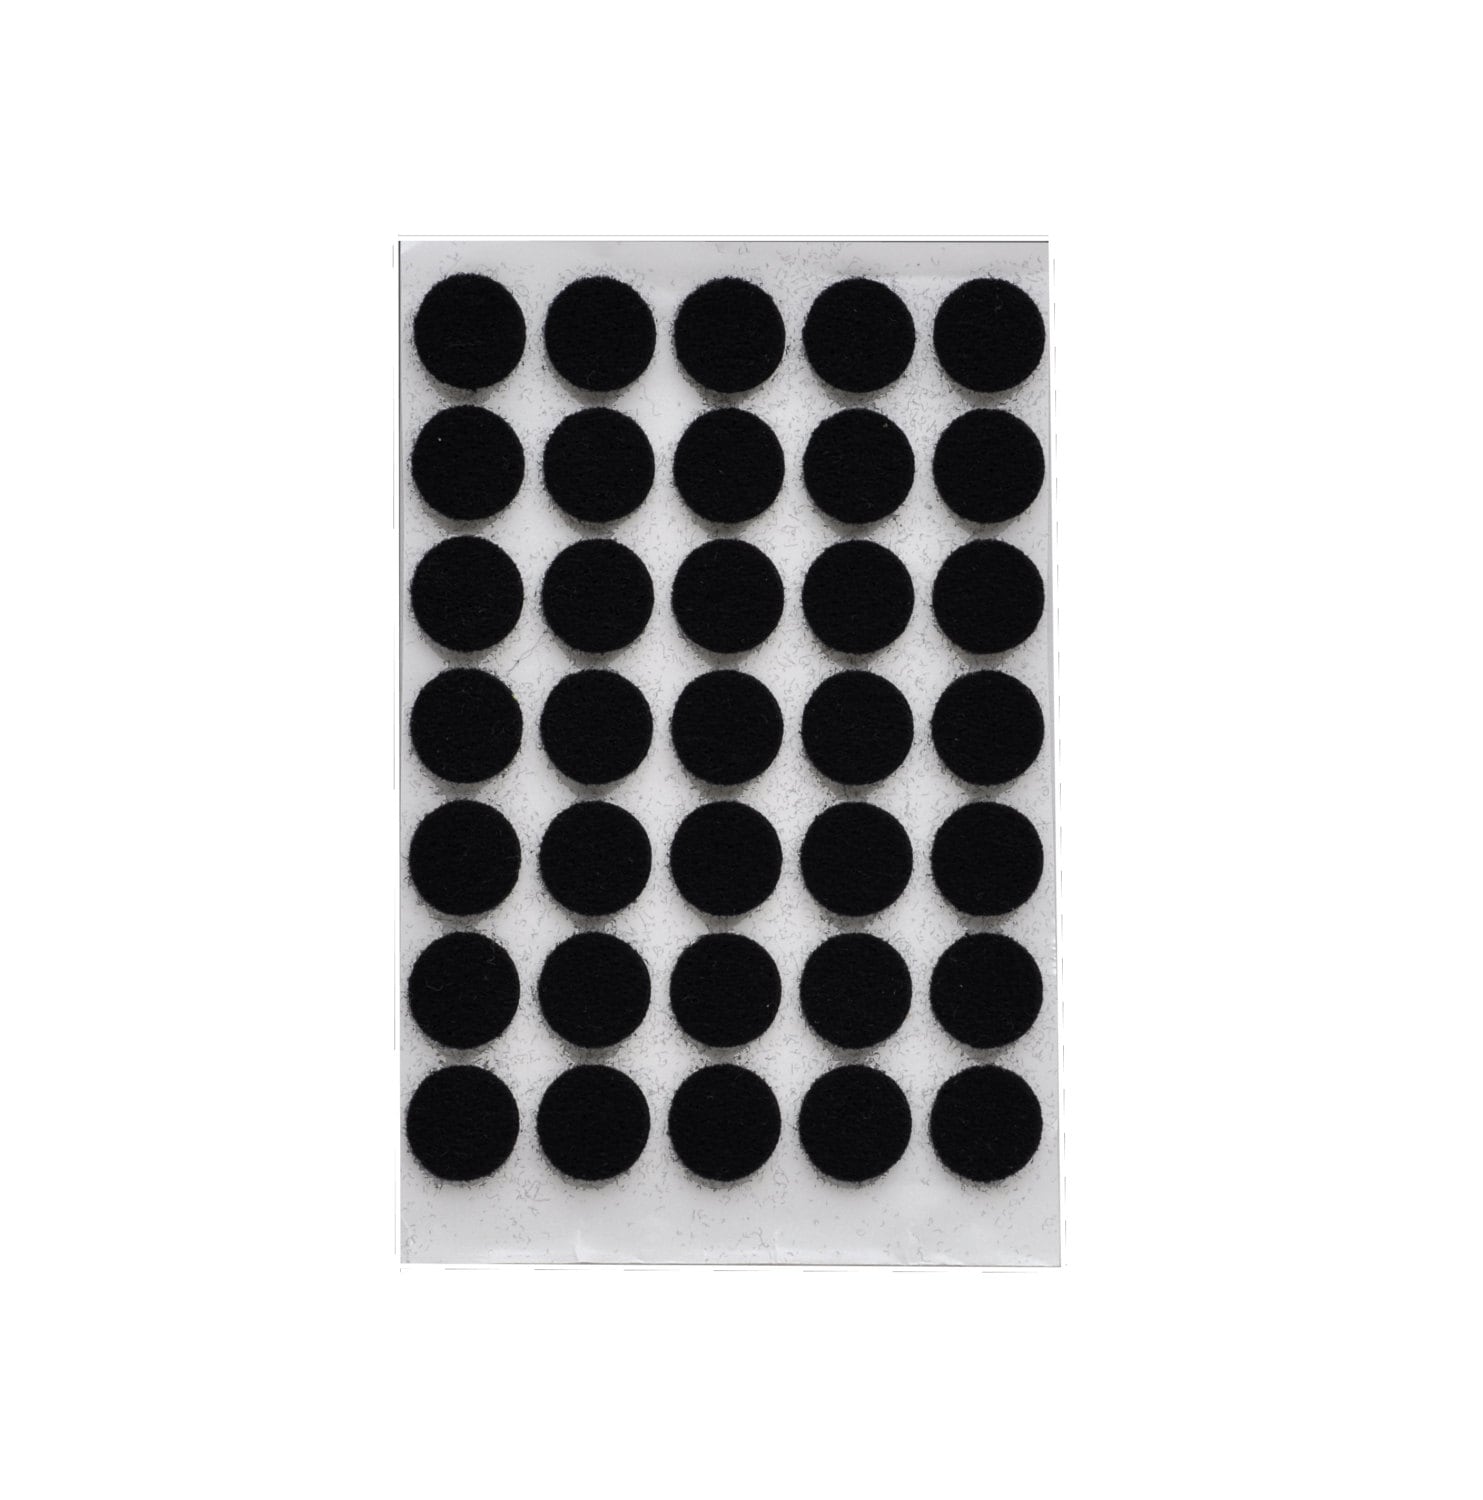 Pack of 40 Black Felt Baise Circles 25mm Diameter Adhesive Sticky